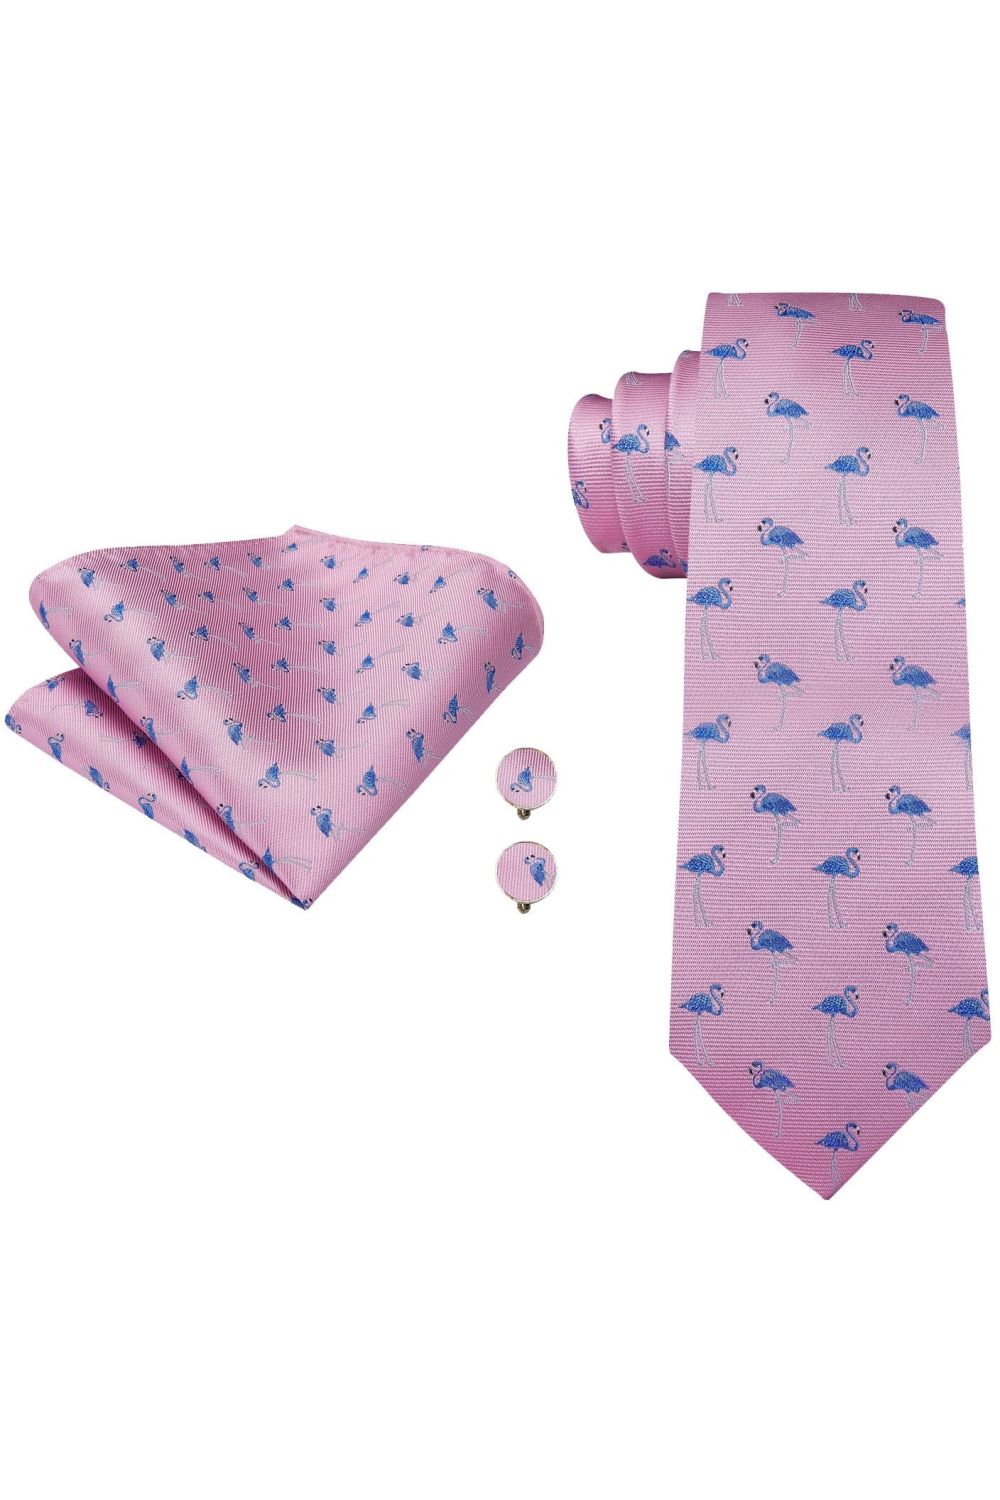 Pink & Blue Flamingo tie pocket square cufflink set 